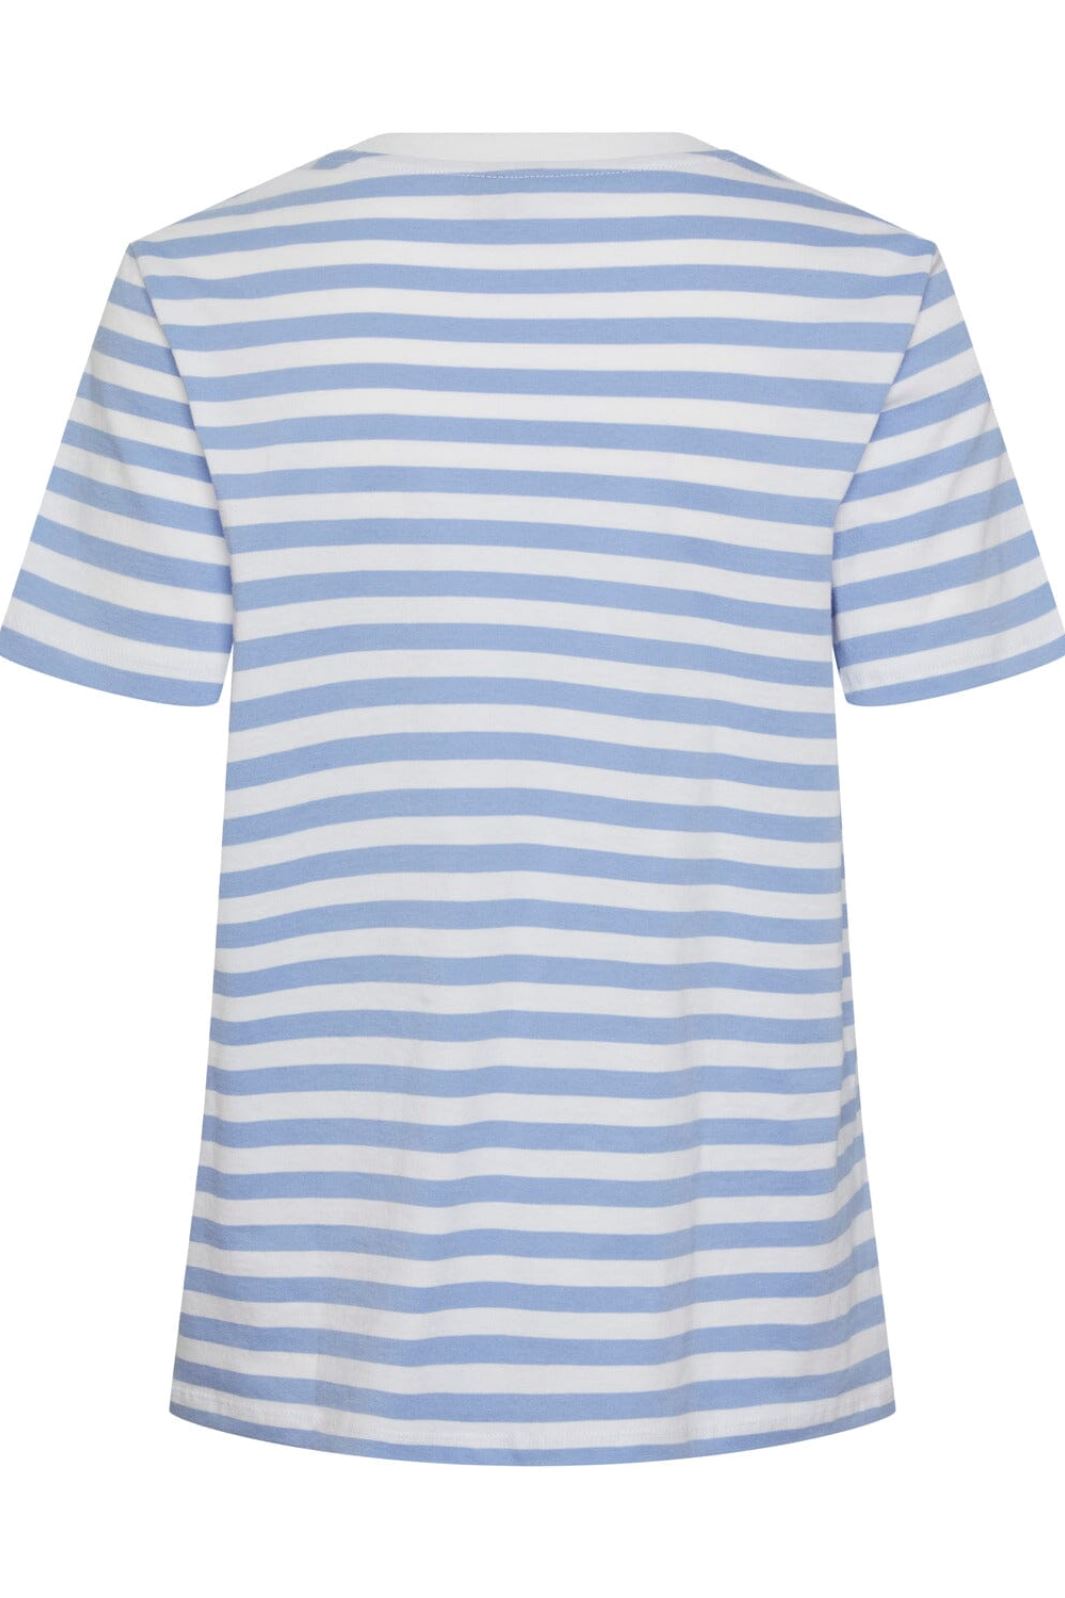 Pieces - Pcria Ss Tee Stripes - 4400582 Hydrangea Bright White T-shirts 